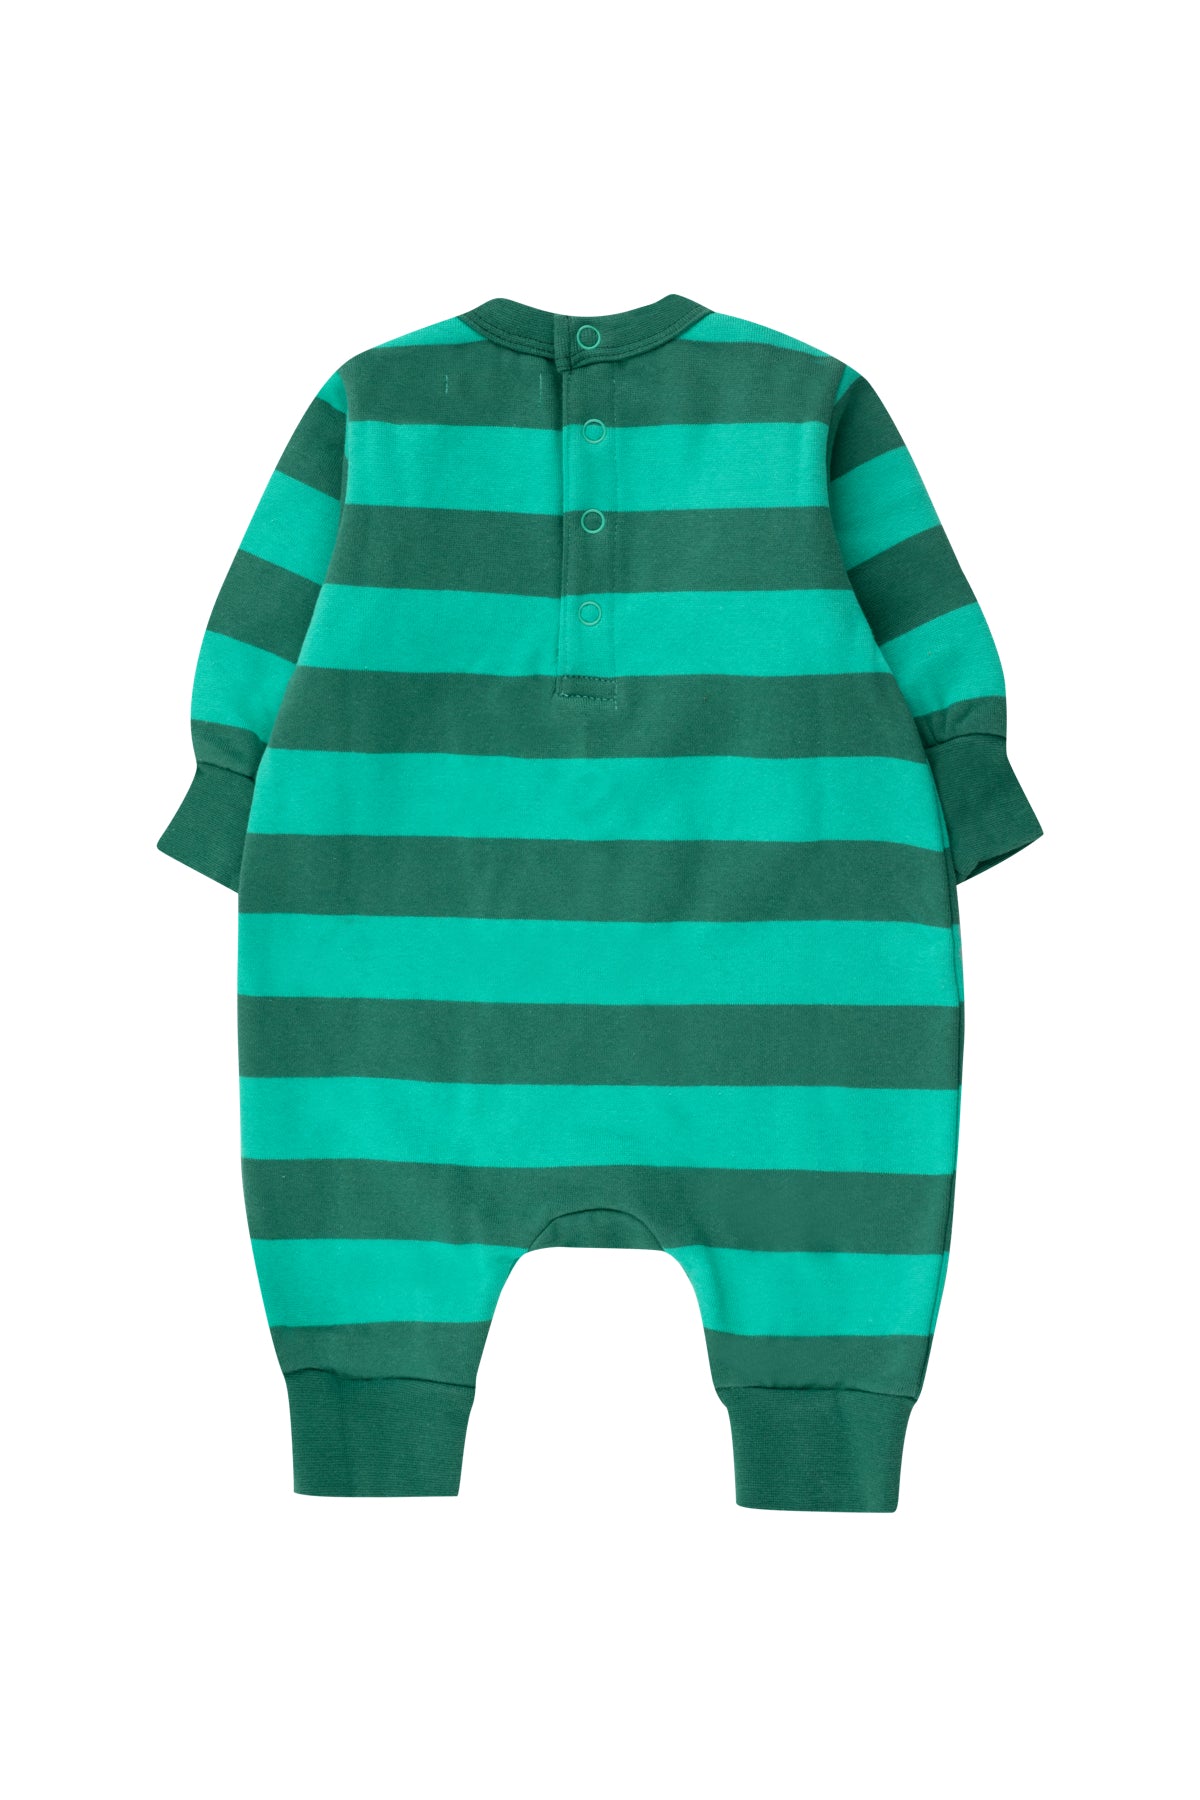 Tiny Cottons Tiny Stripes One Piece - Emerald / Dark Green